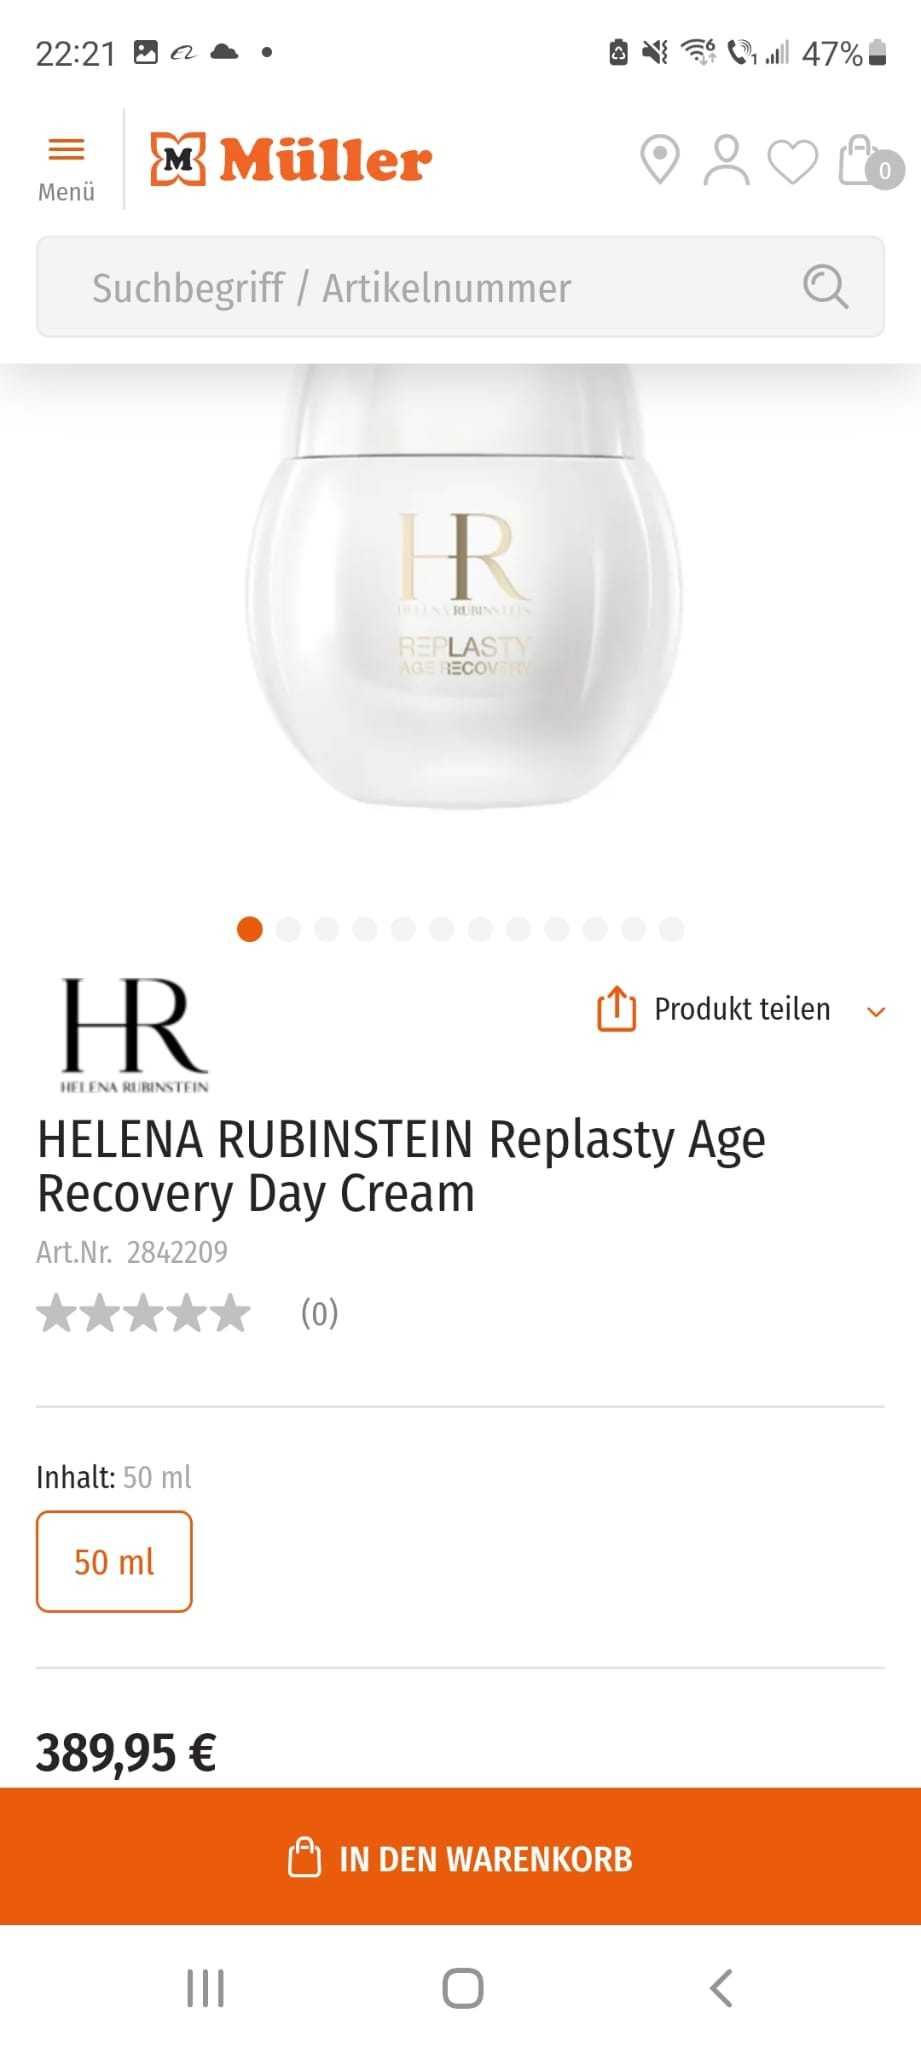 HELENA RUBINSTEIN HR Replasty Age Recovery Day Cream 50ml